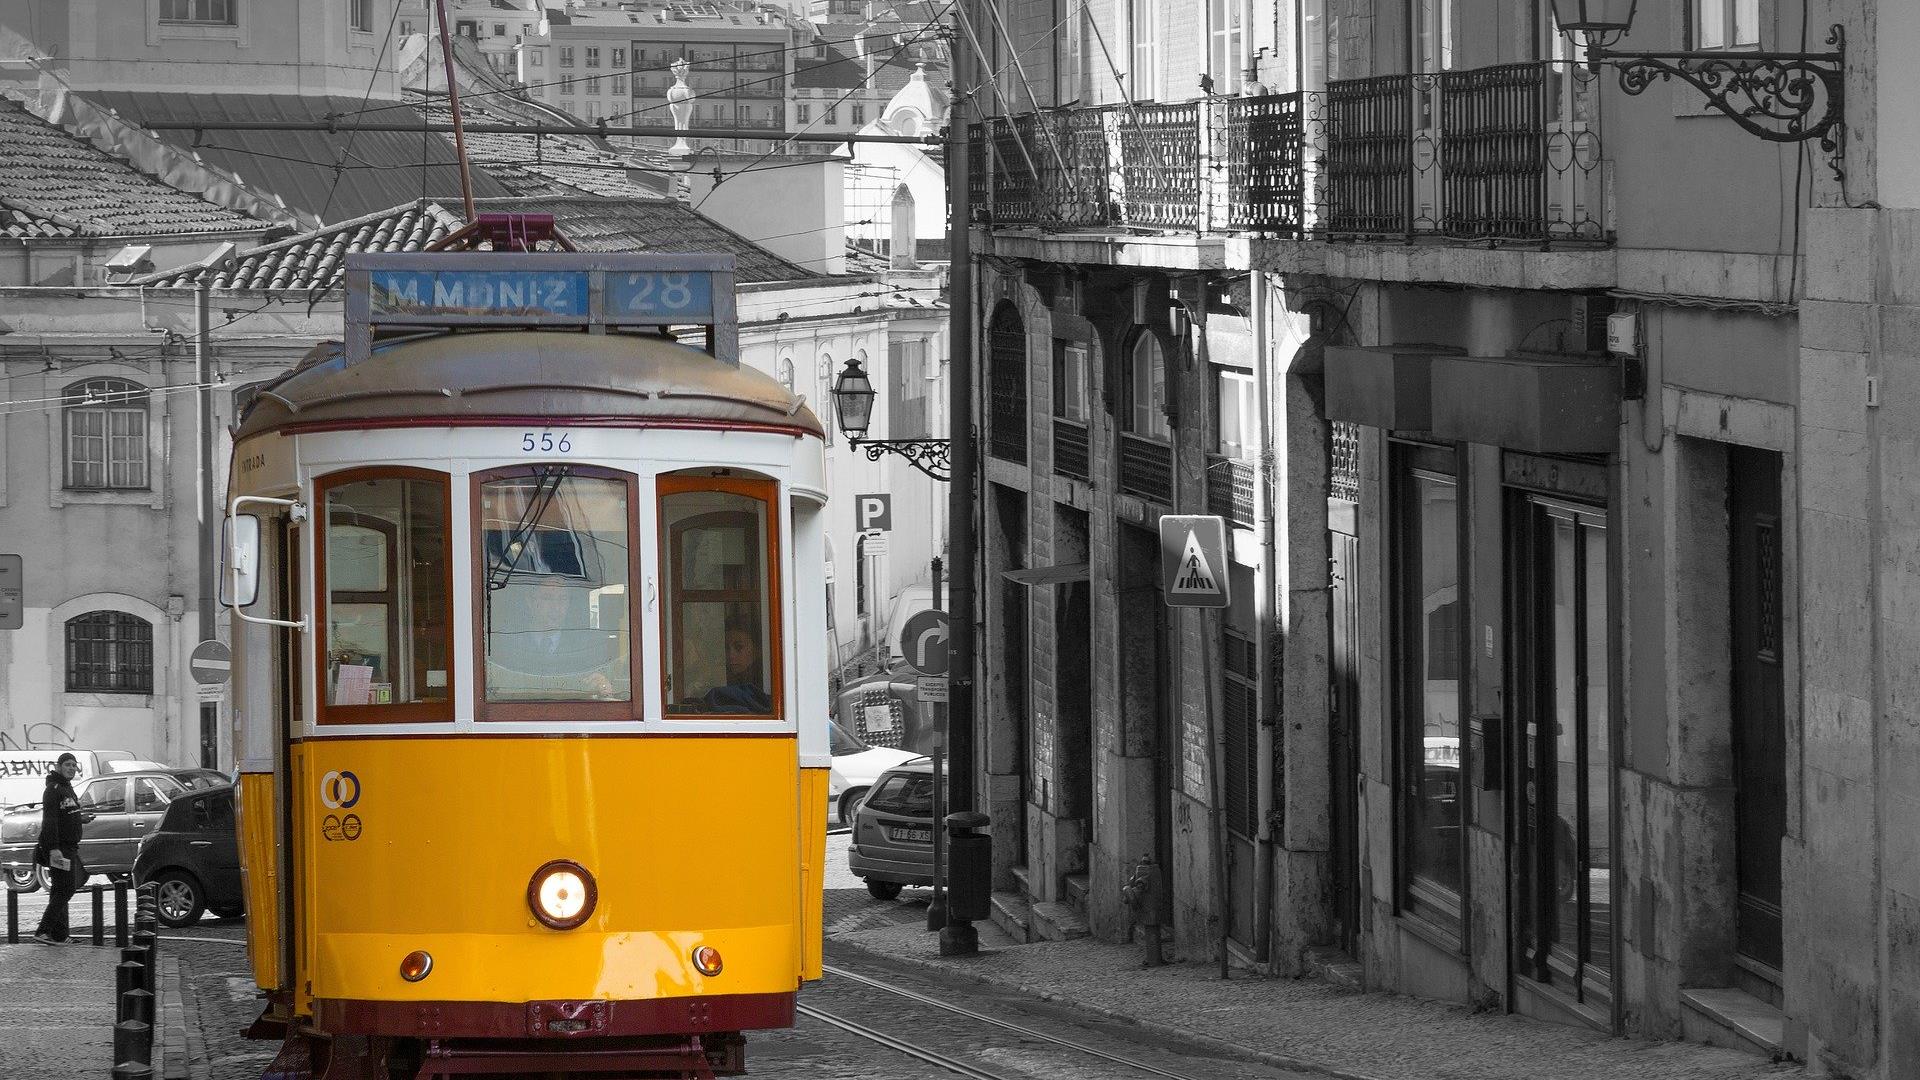 Lisbon 2543511 1920::Pixabay:Peterpaulrubens